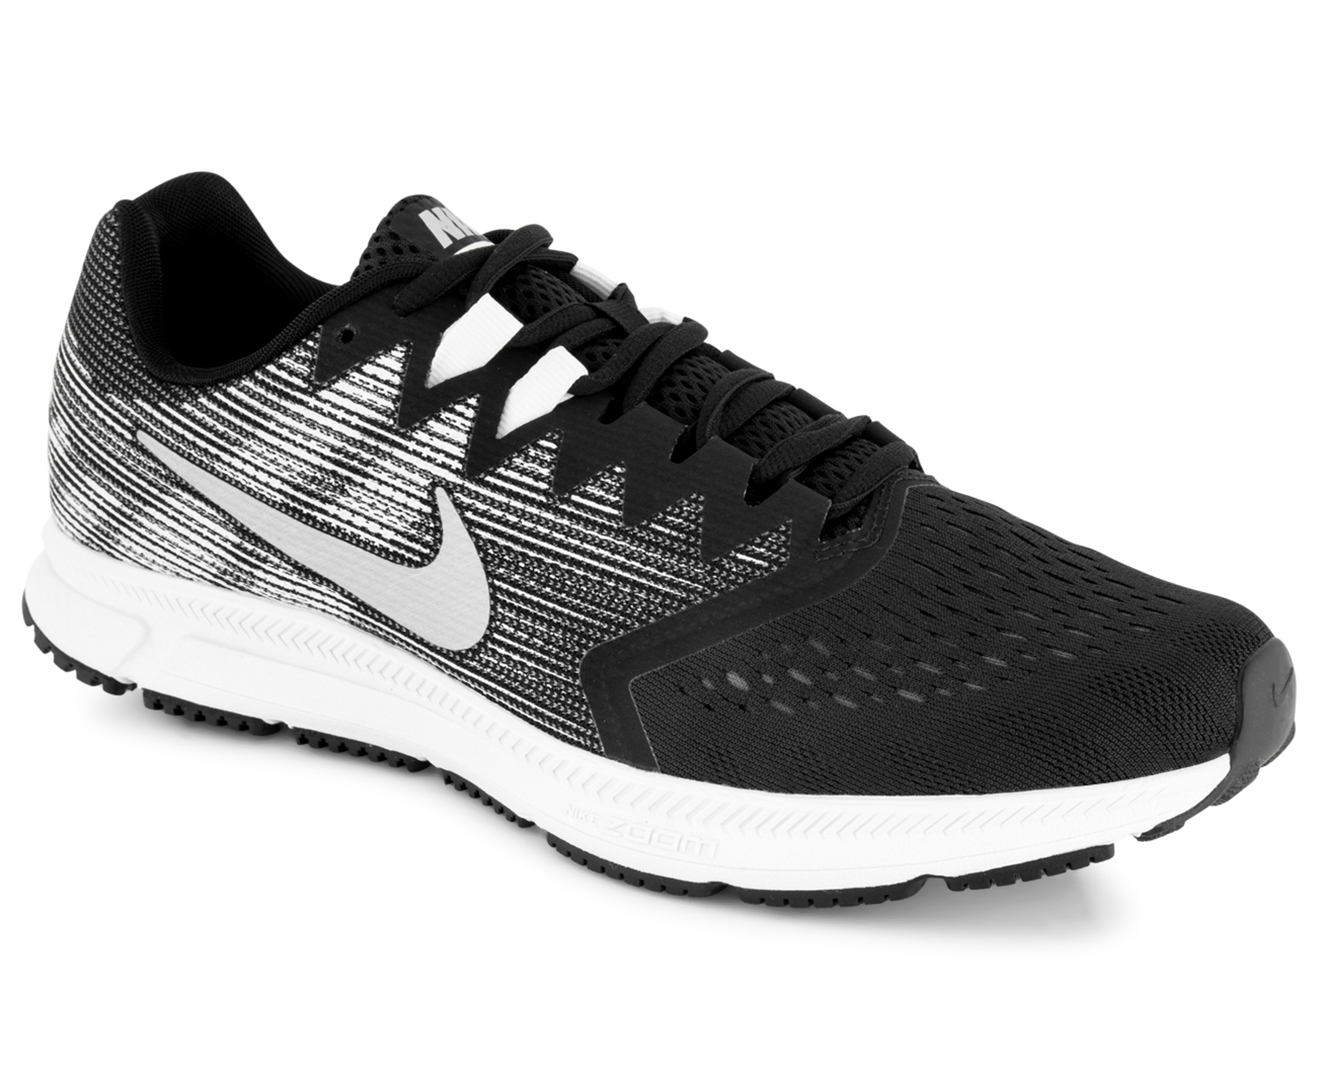 Nike Men's Zoom Span 2 Running Shoe - Black/Metallic Silver | Catch.com.au